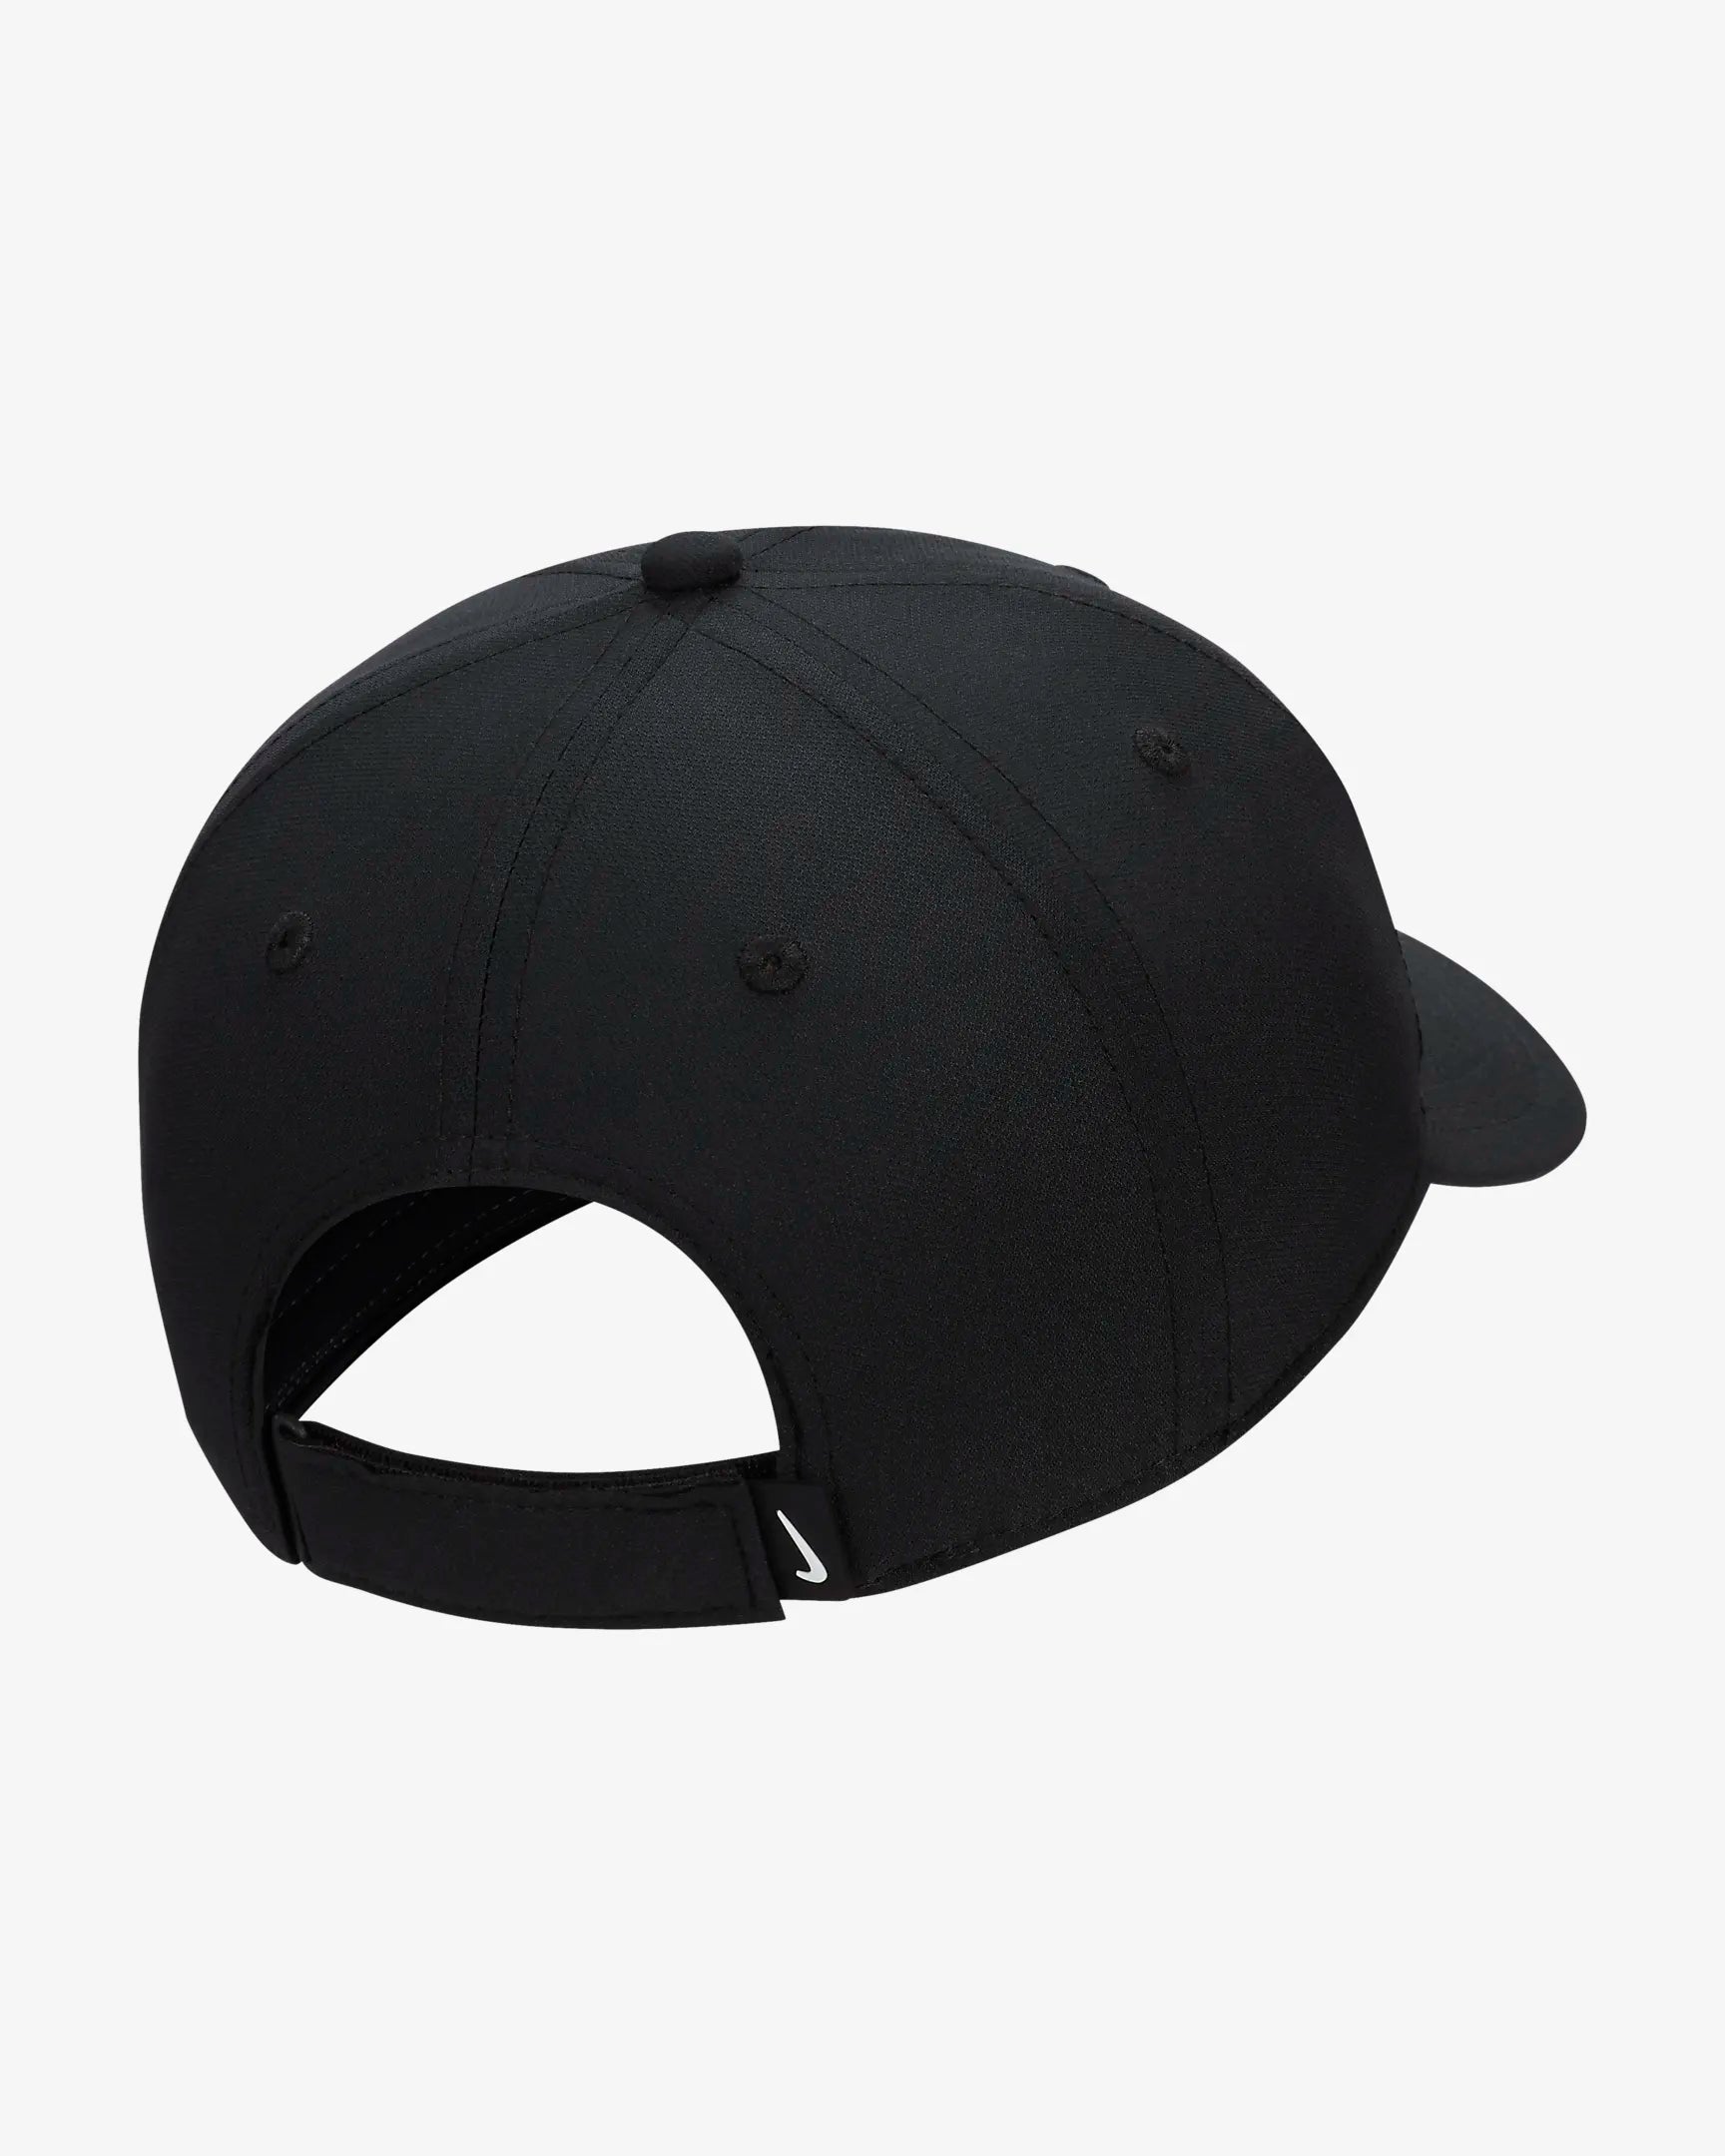 Nike Club Cap - Black